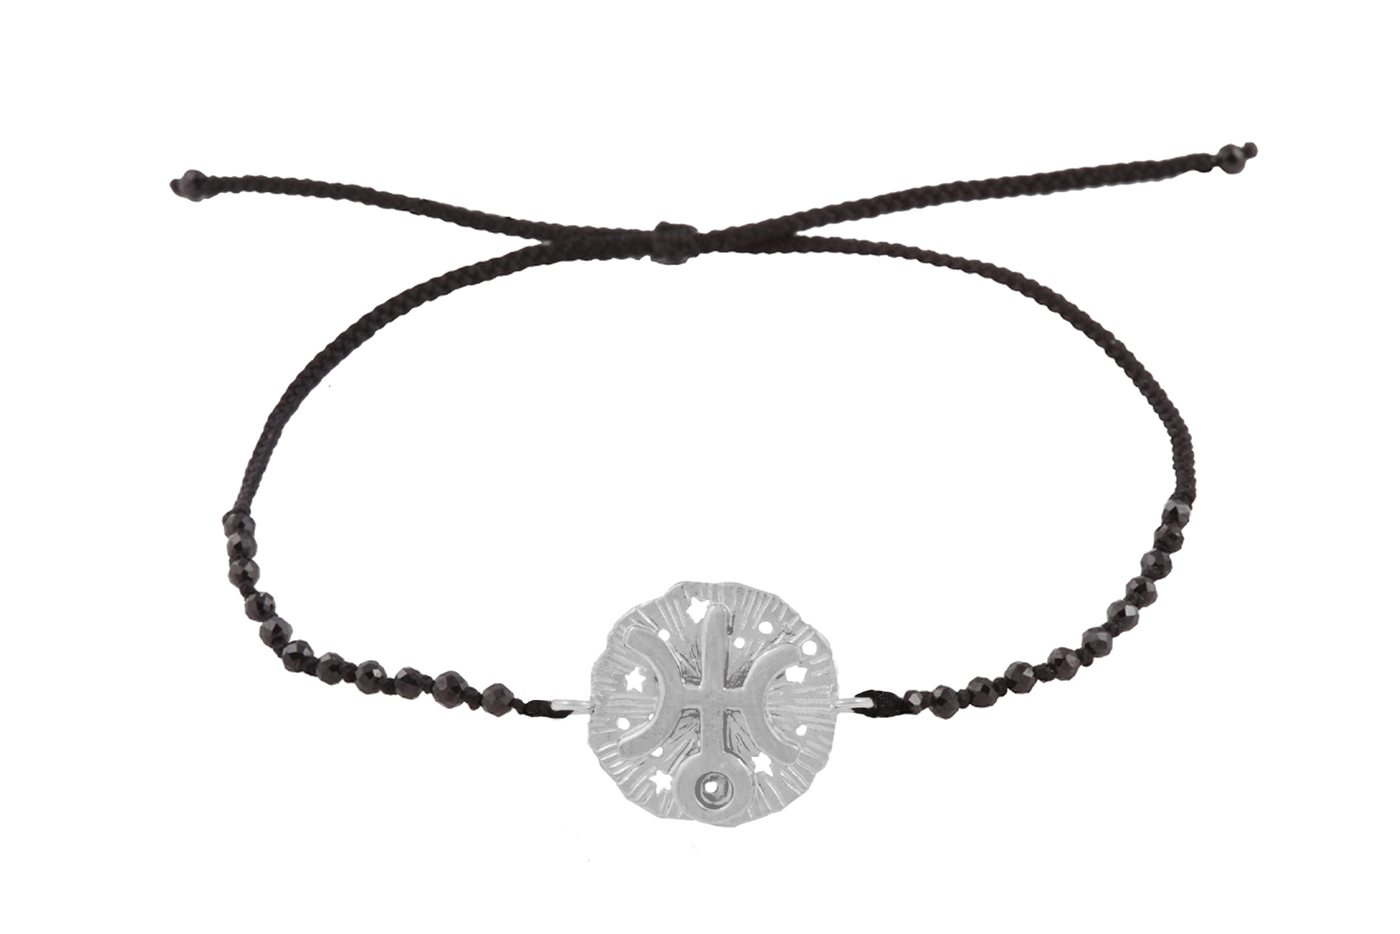 Uranus Medallion Amulet bracelet with beads. Silver